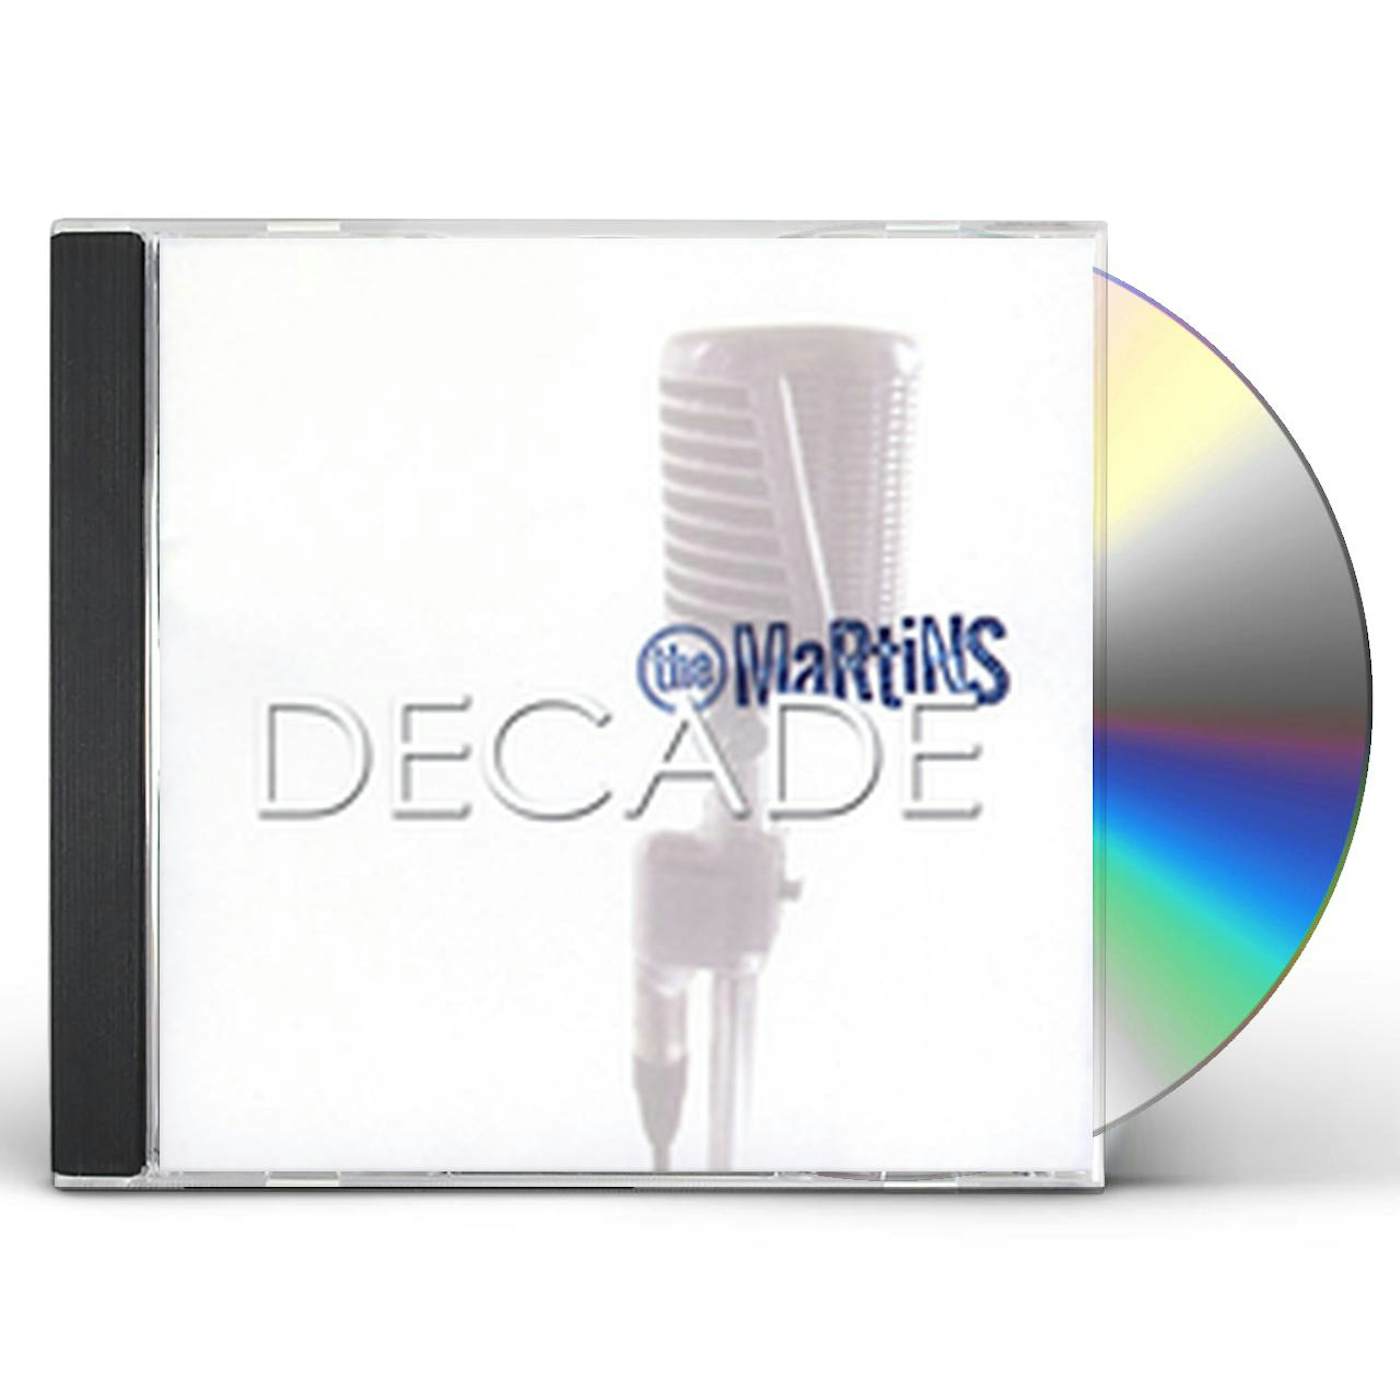 The Martins DECADE CD